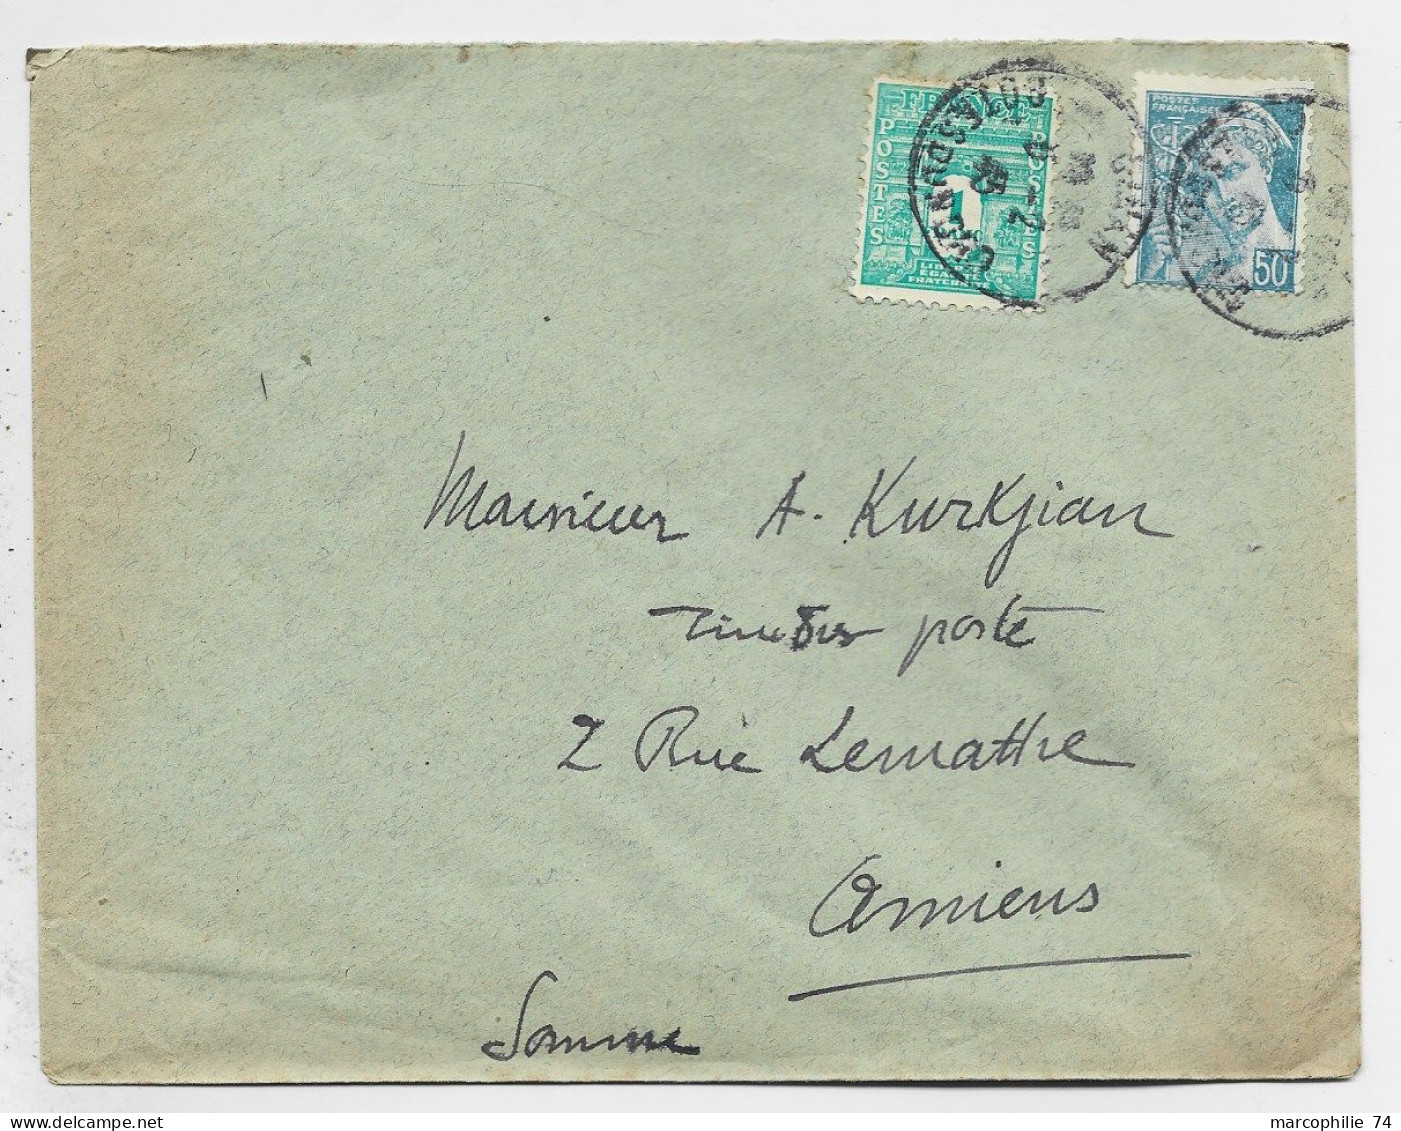 ARC TRIOMPHE 1FR +50C MERCURE LETTRE DINAN 5.2.1945 AU TARIF - 1944-45 Arc Of Triomphe